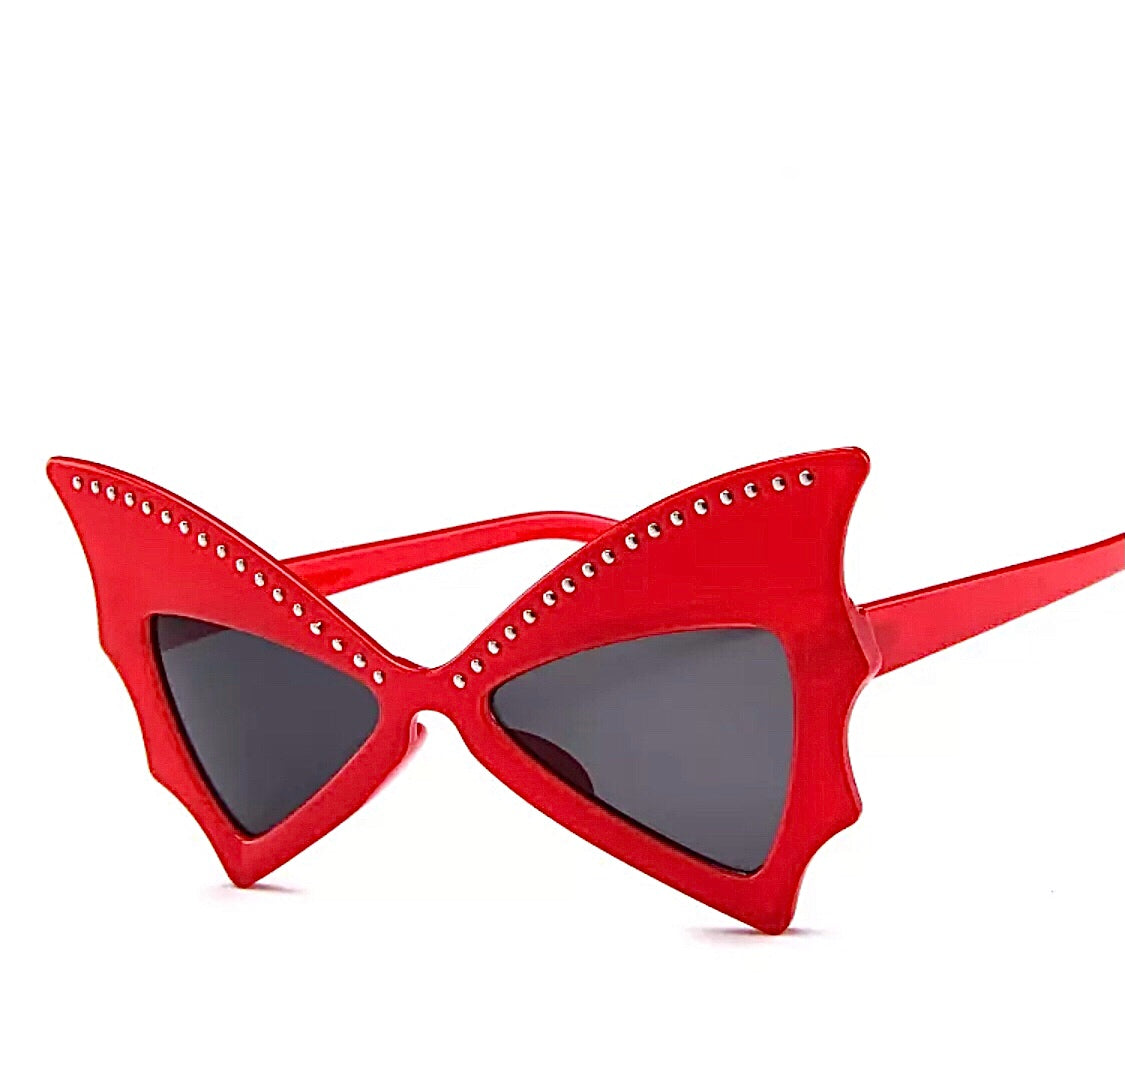 Bat Wing Sunglasses Red